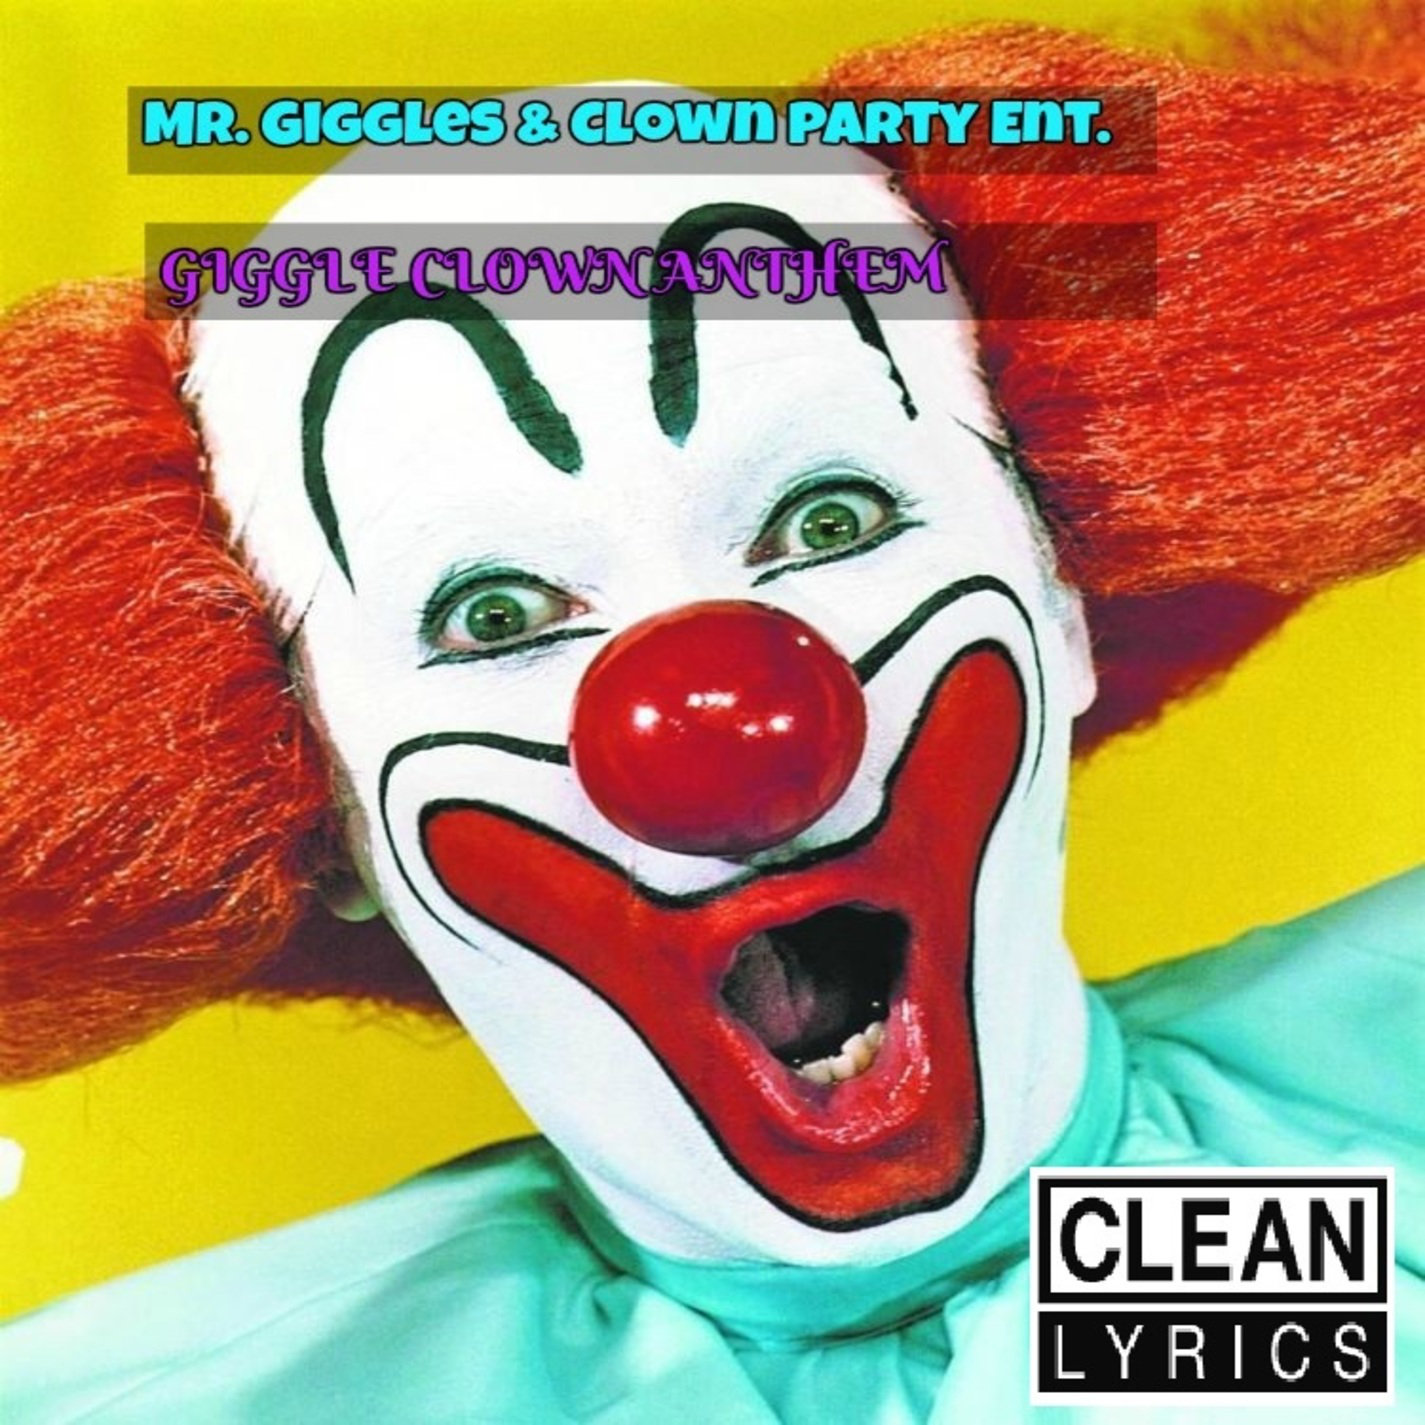 Giggle Clown Anthem - Single.